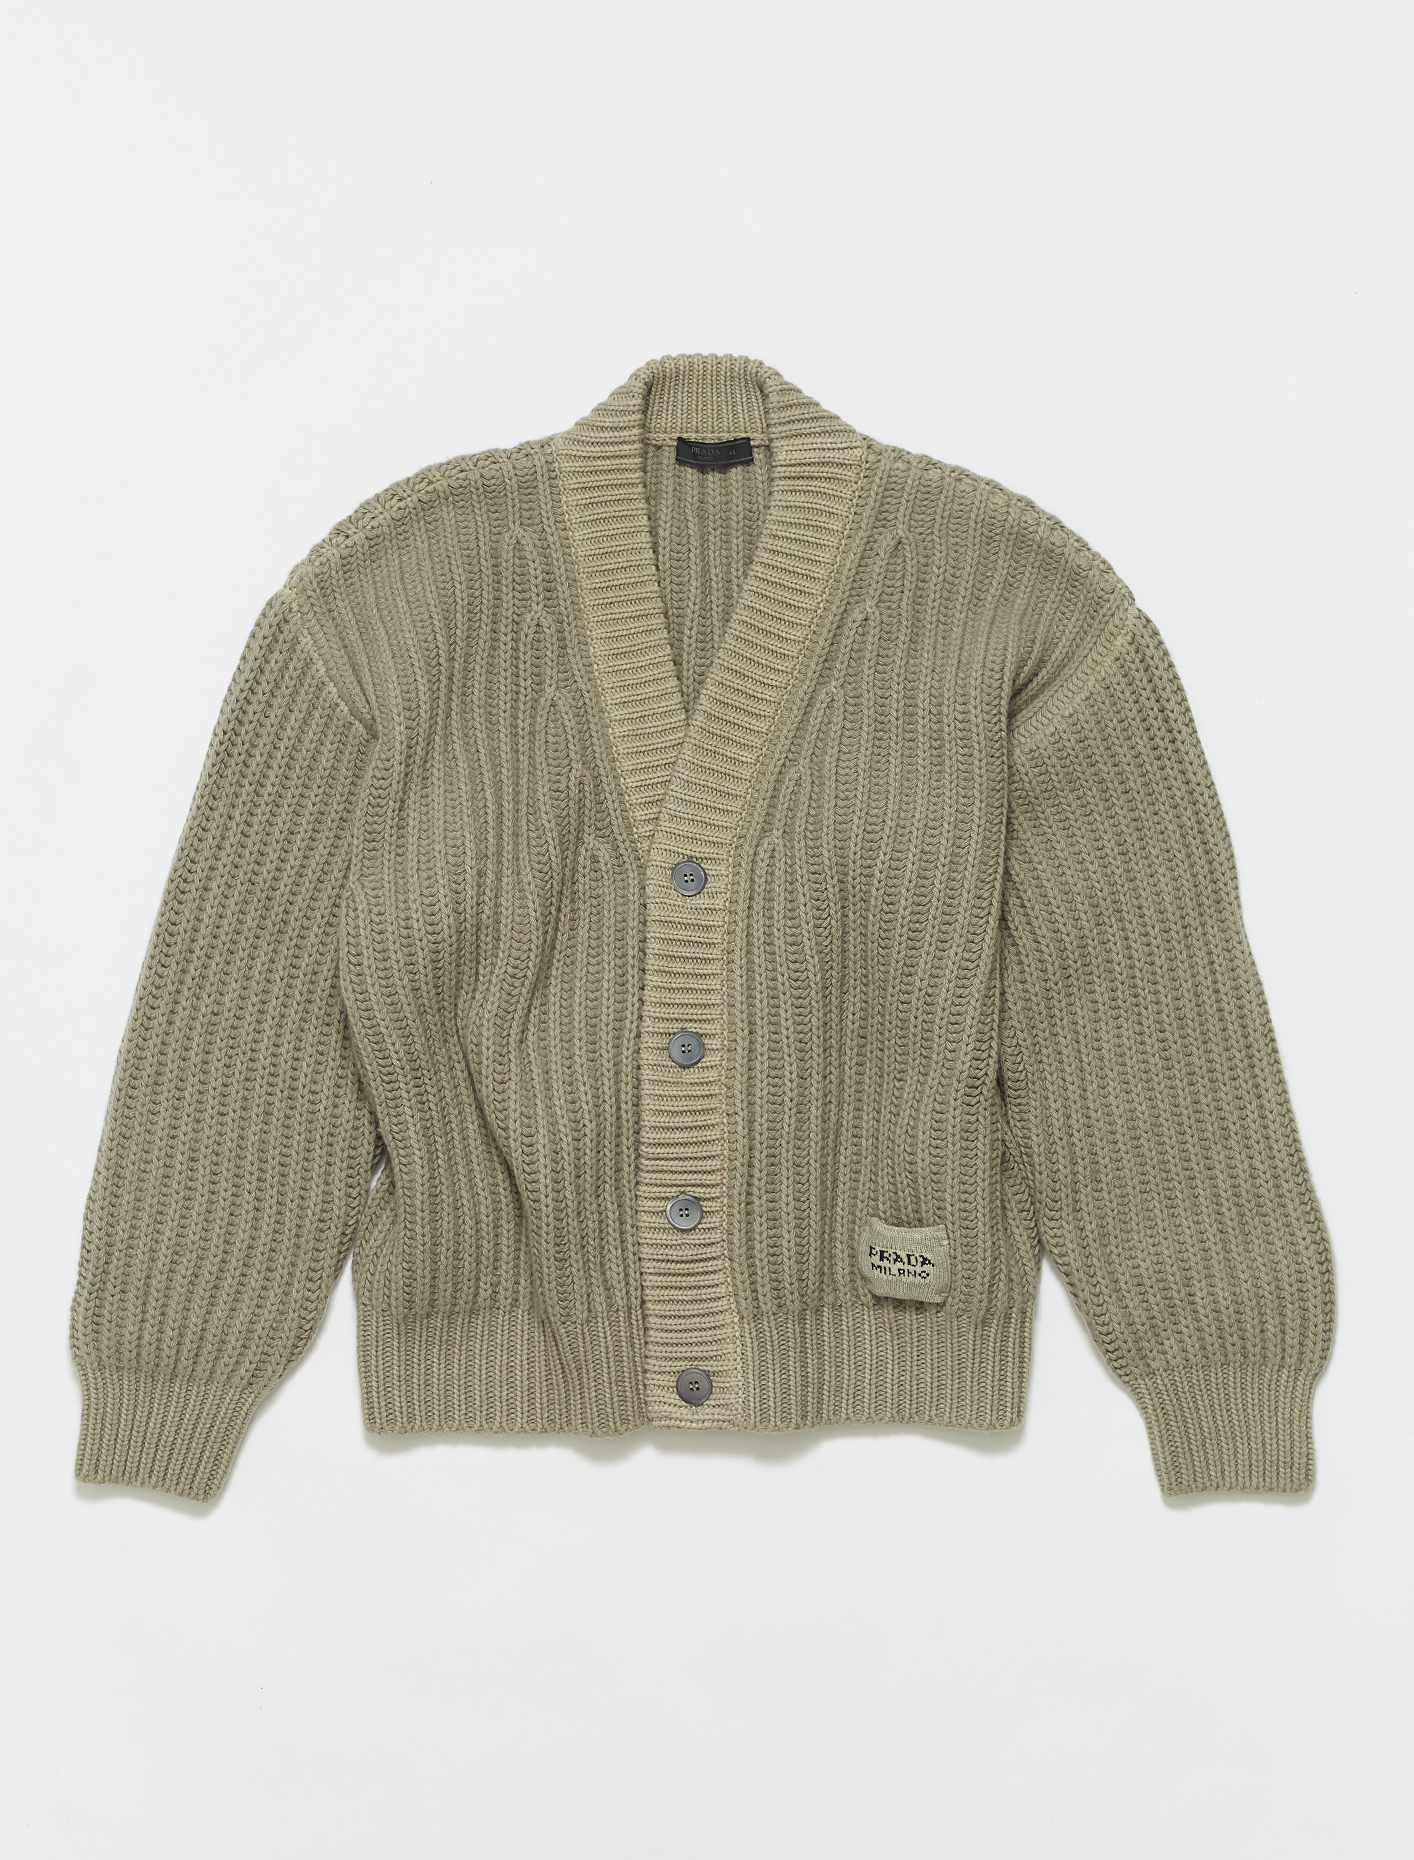 Prada Cashmere and Wool Knit Cardigan | Voo Store Berlin | Worldwide